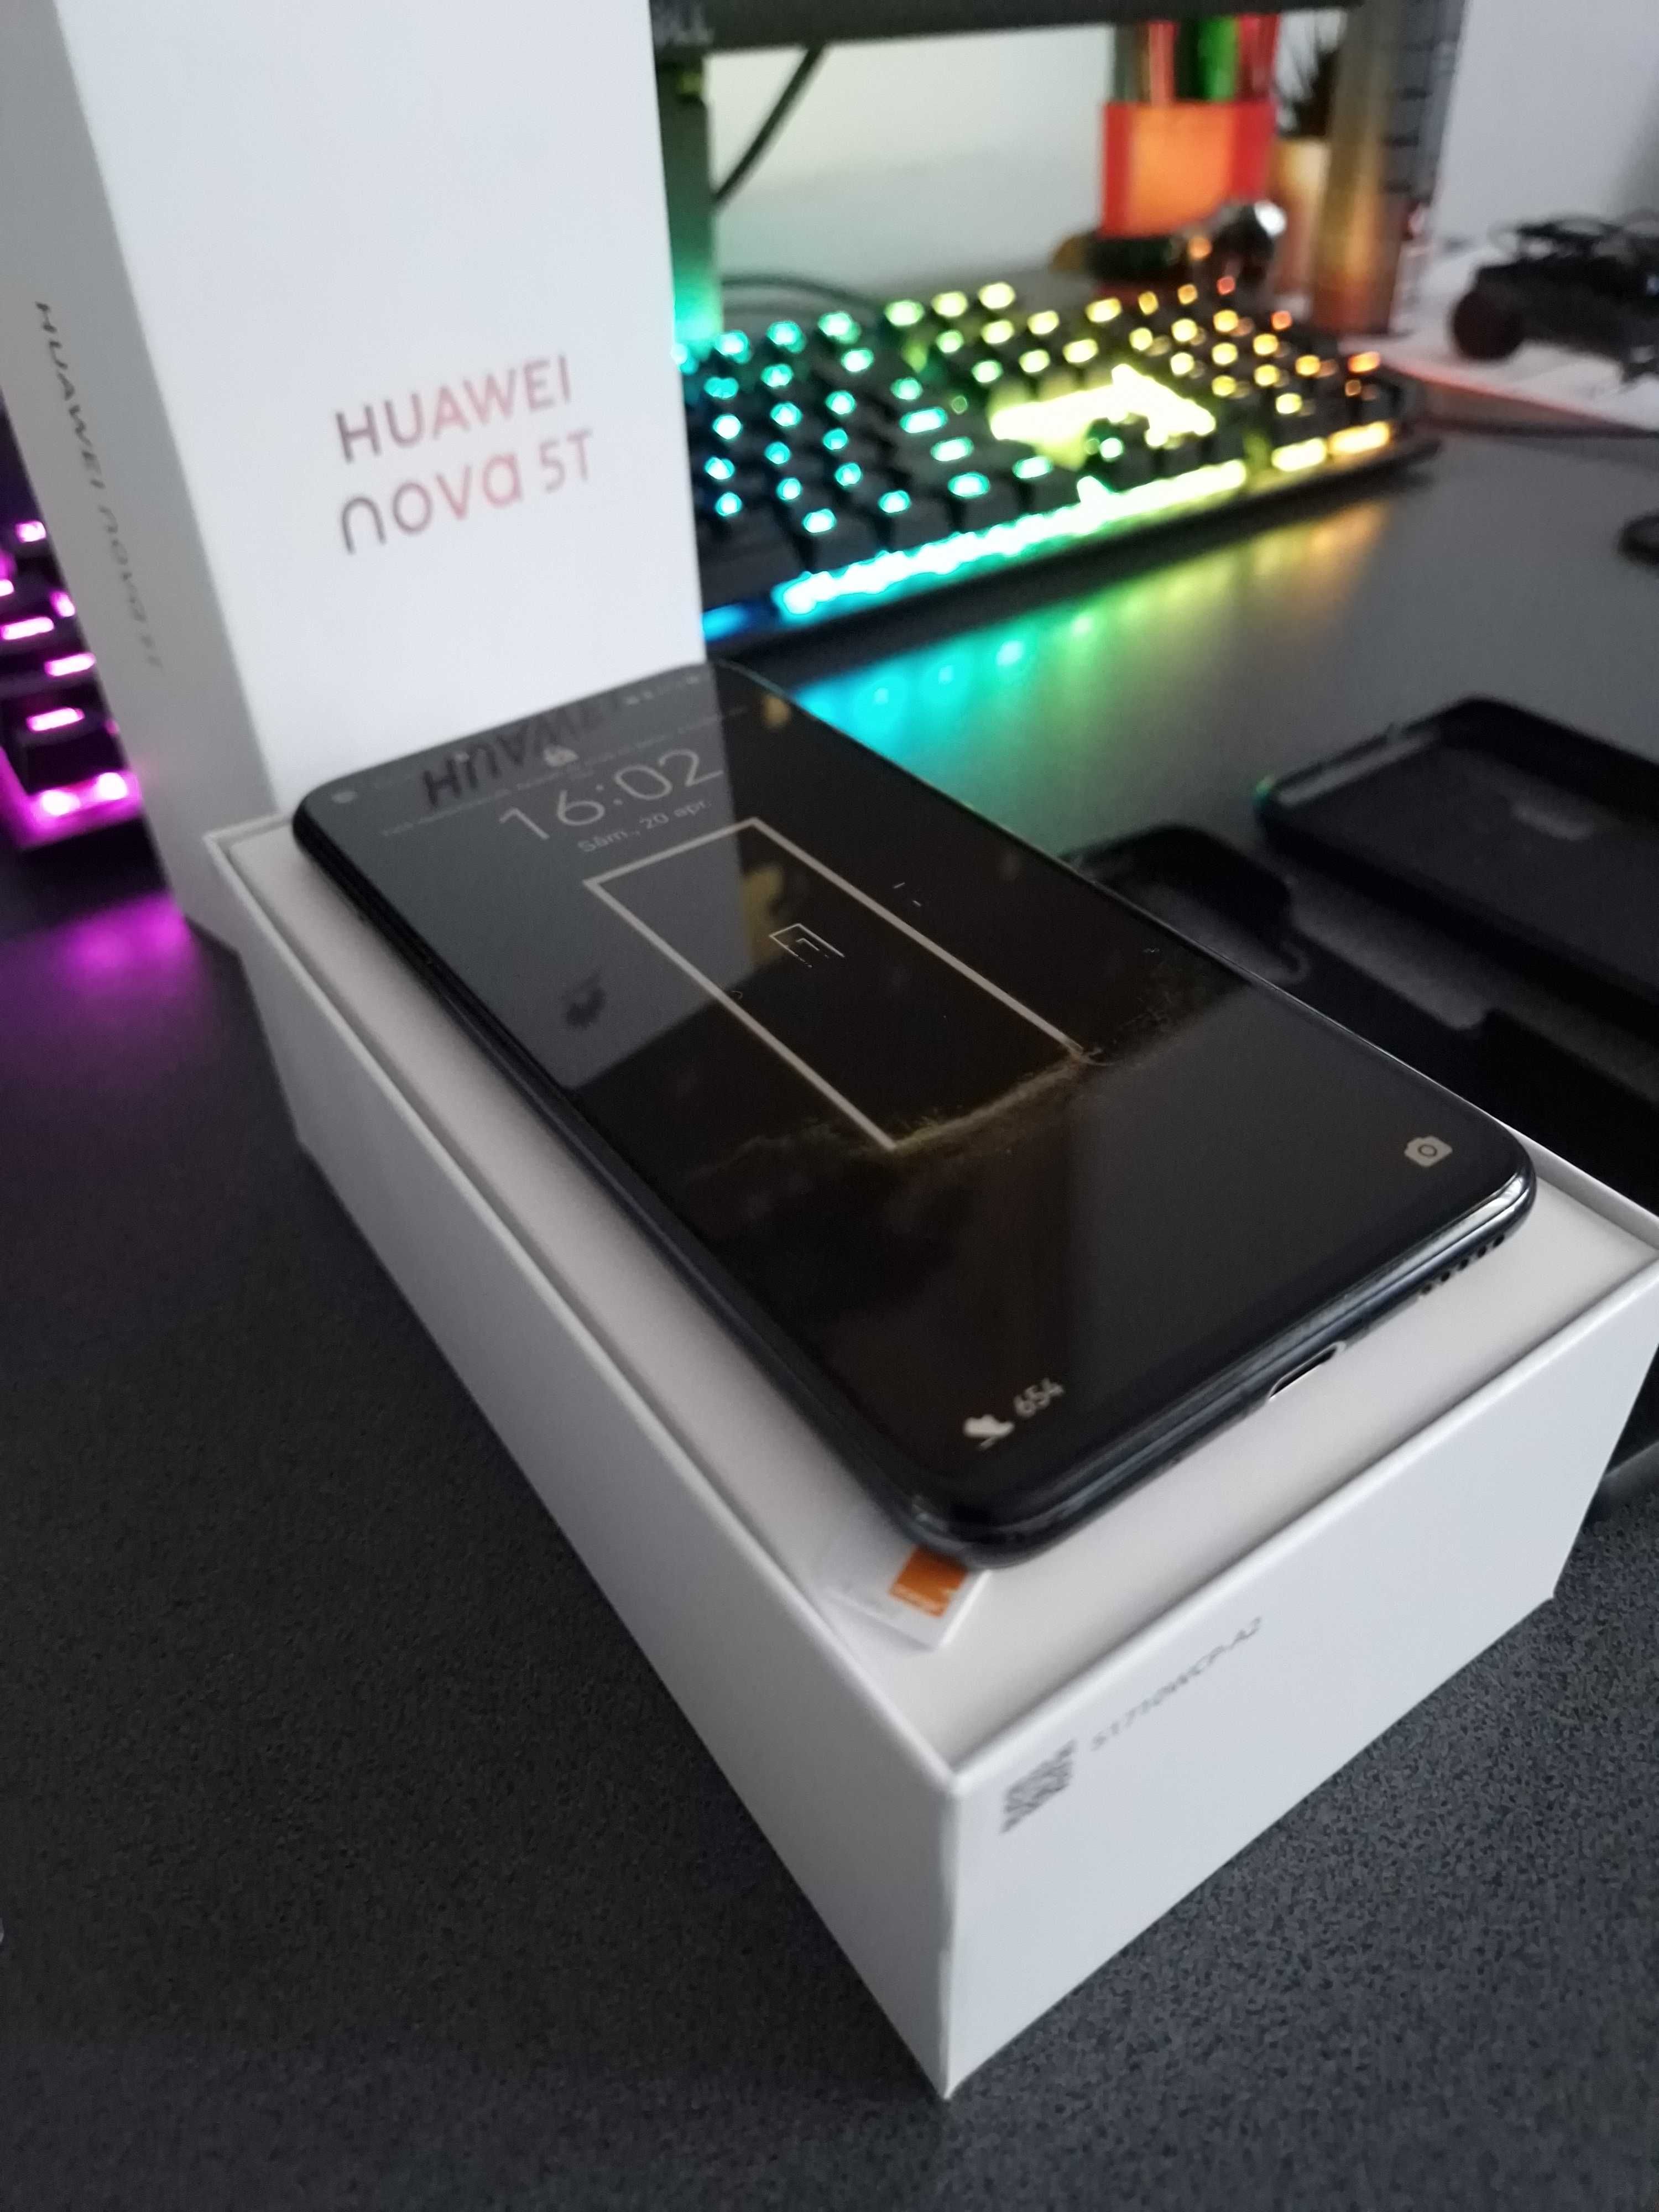 Vând Huawei Nova 5T (ultimul cu android)